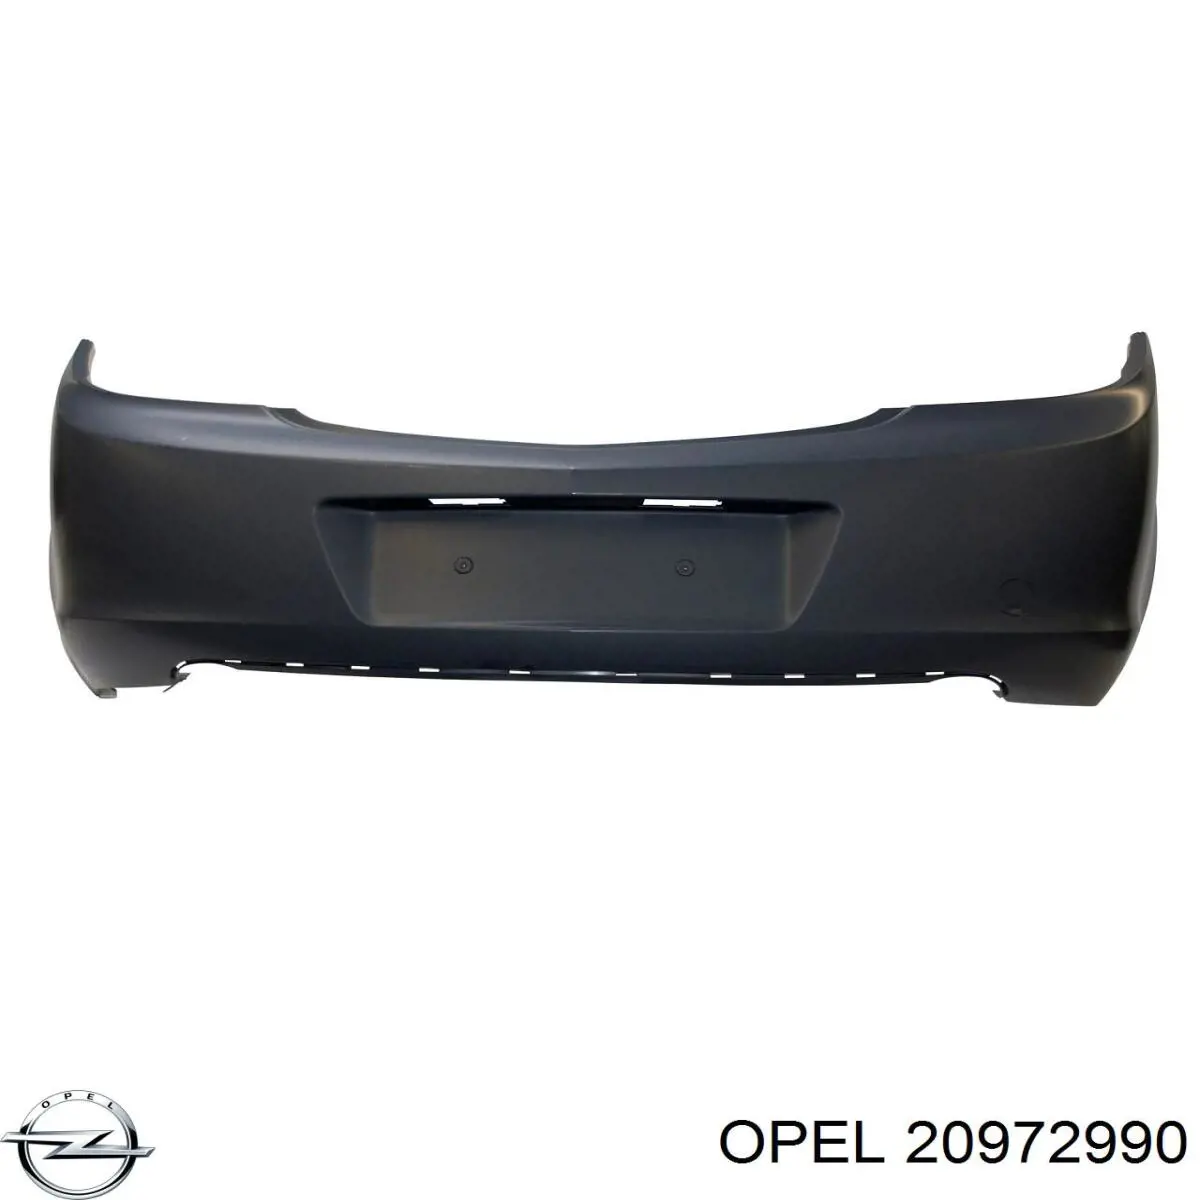 20972990 Opel parachoques trasero